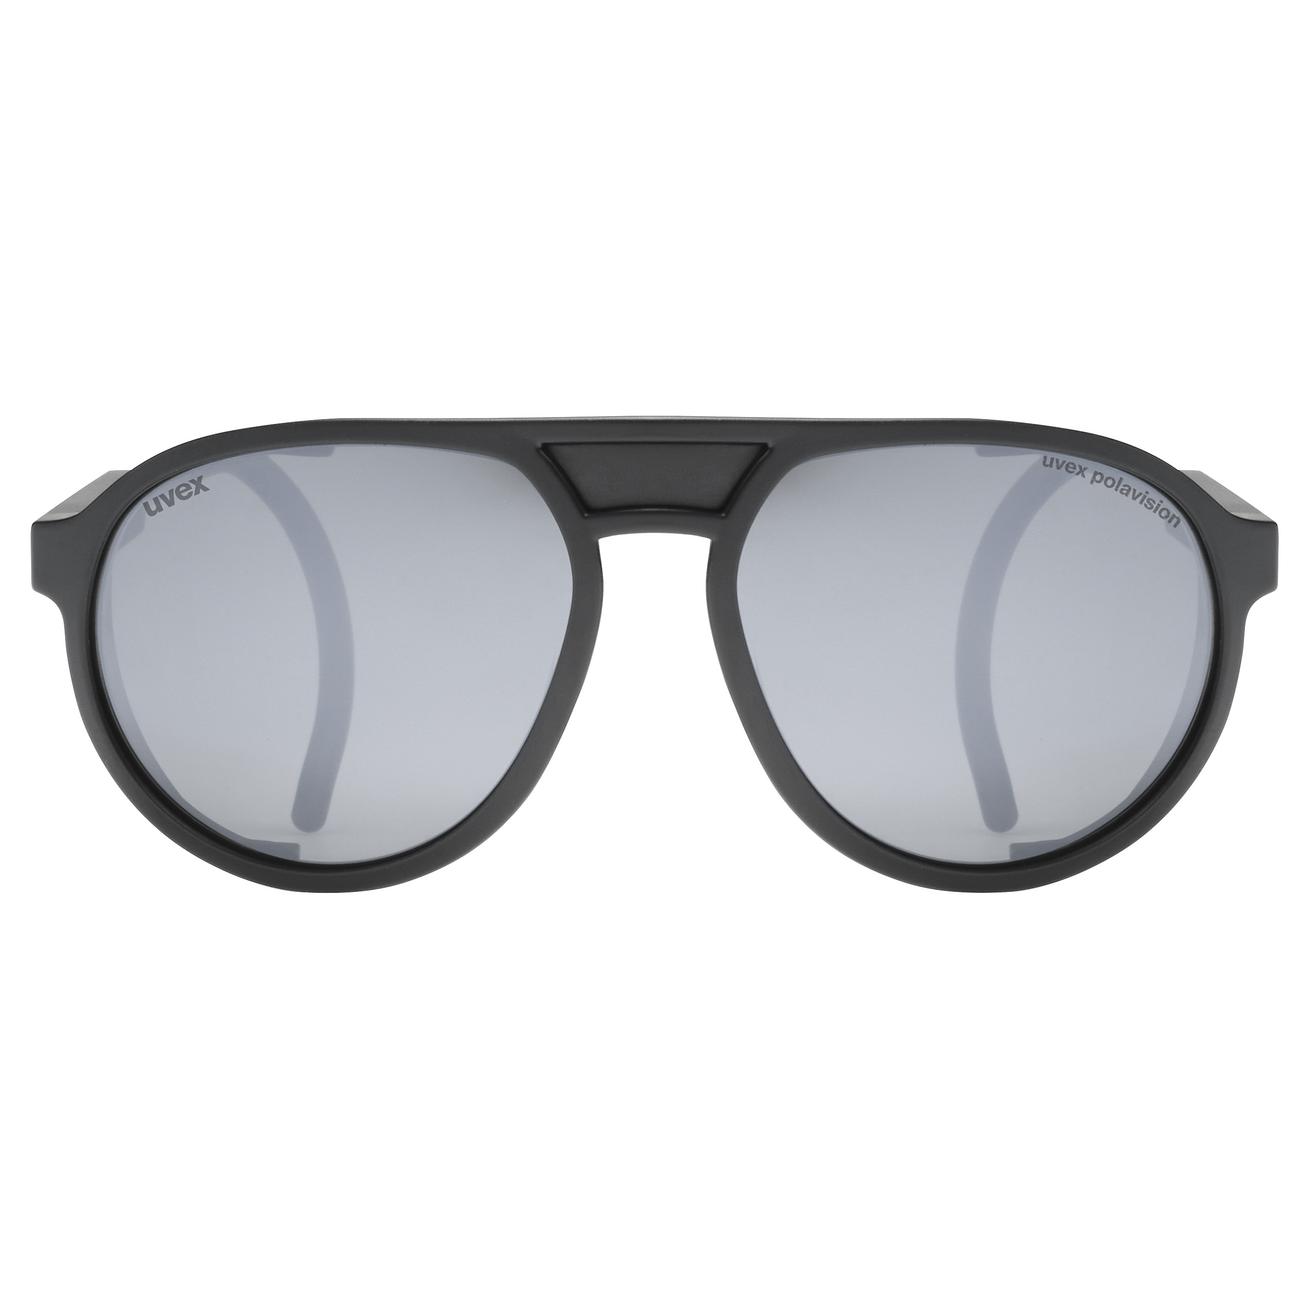 uvex mtn classic P sunglasses - glacier glasses with polarized lens ...